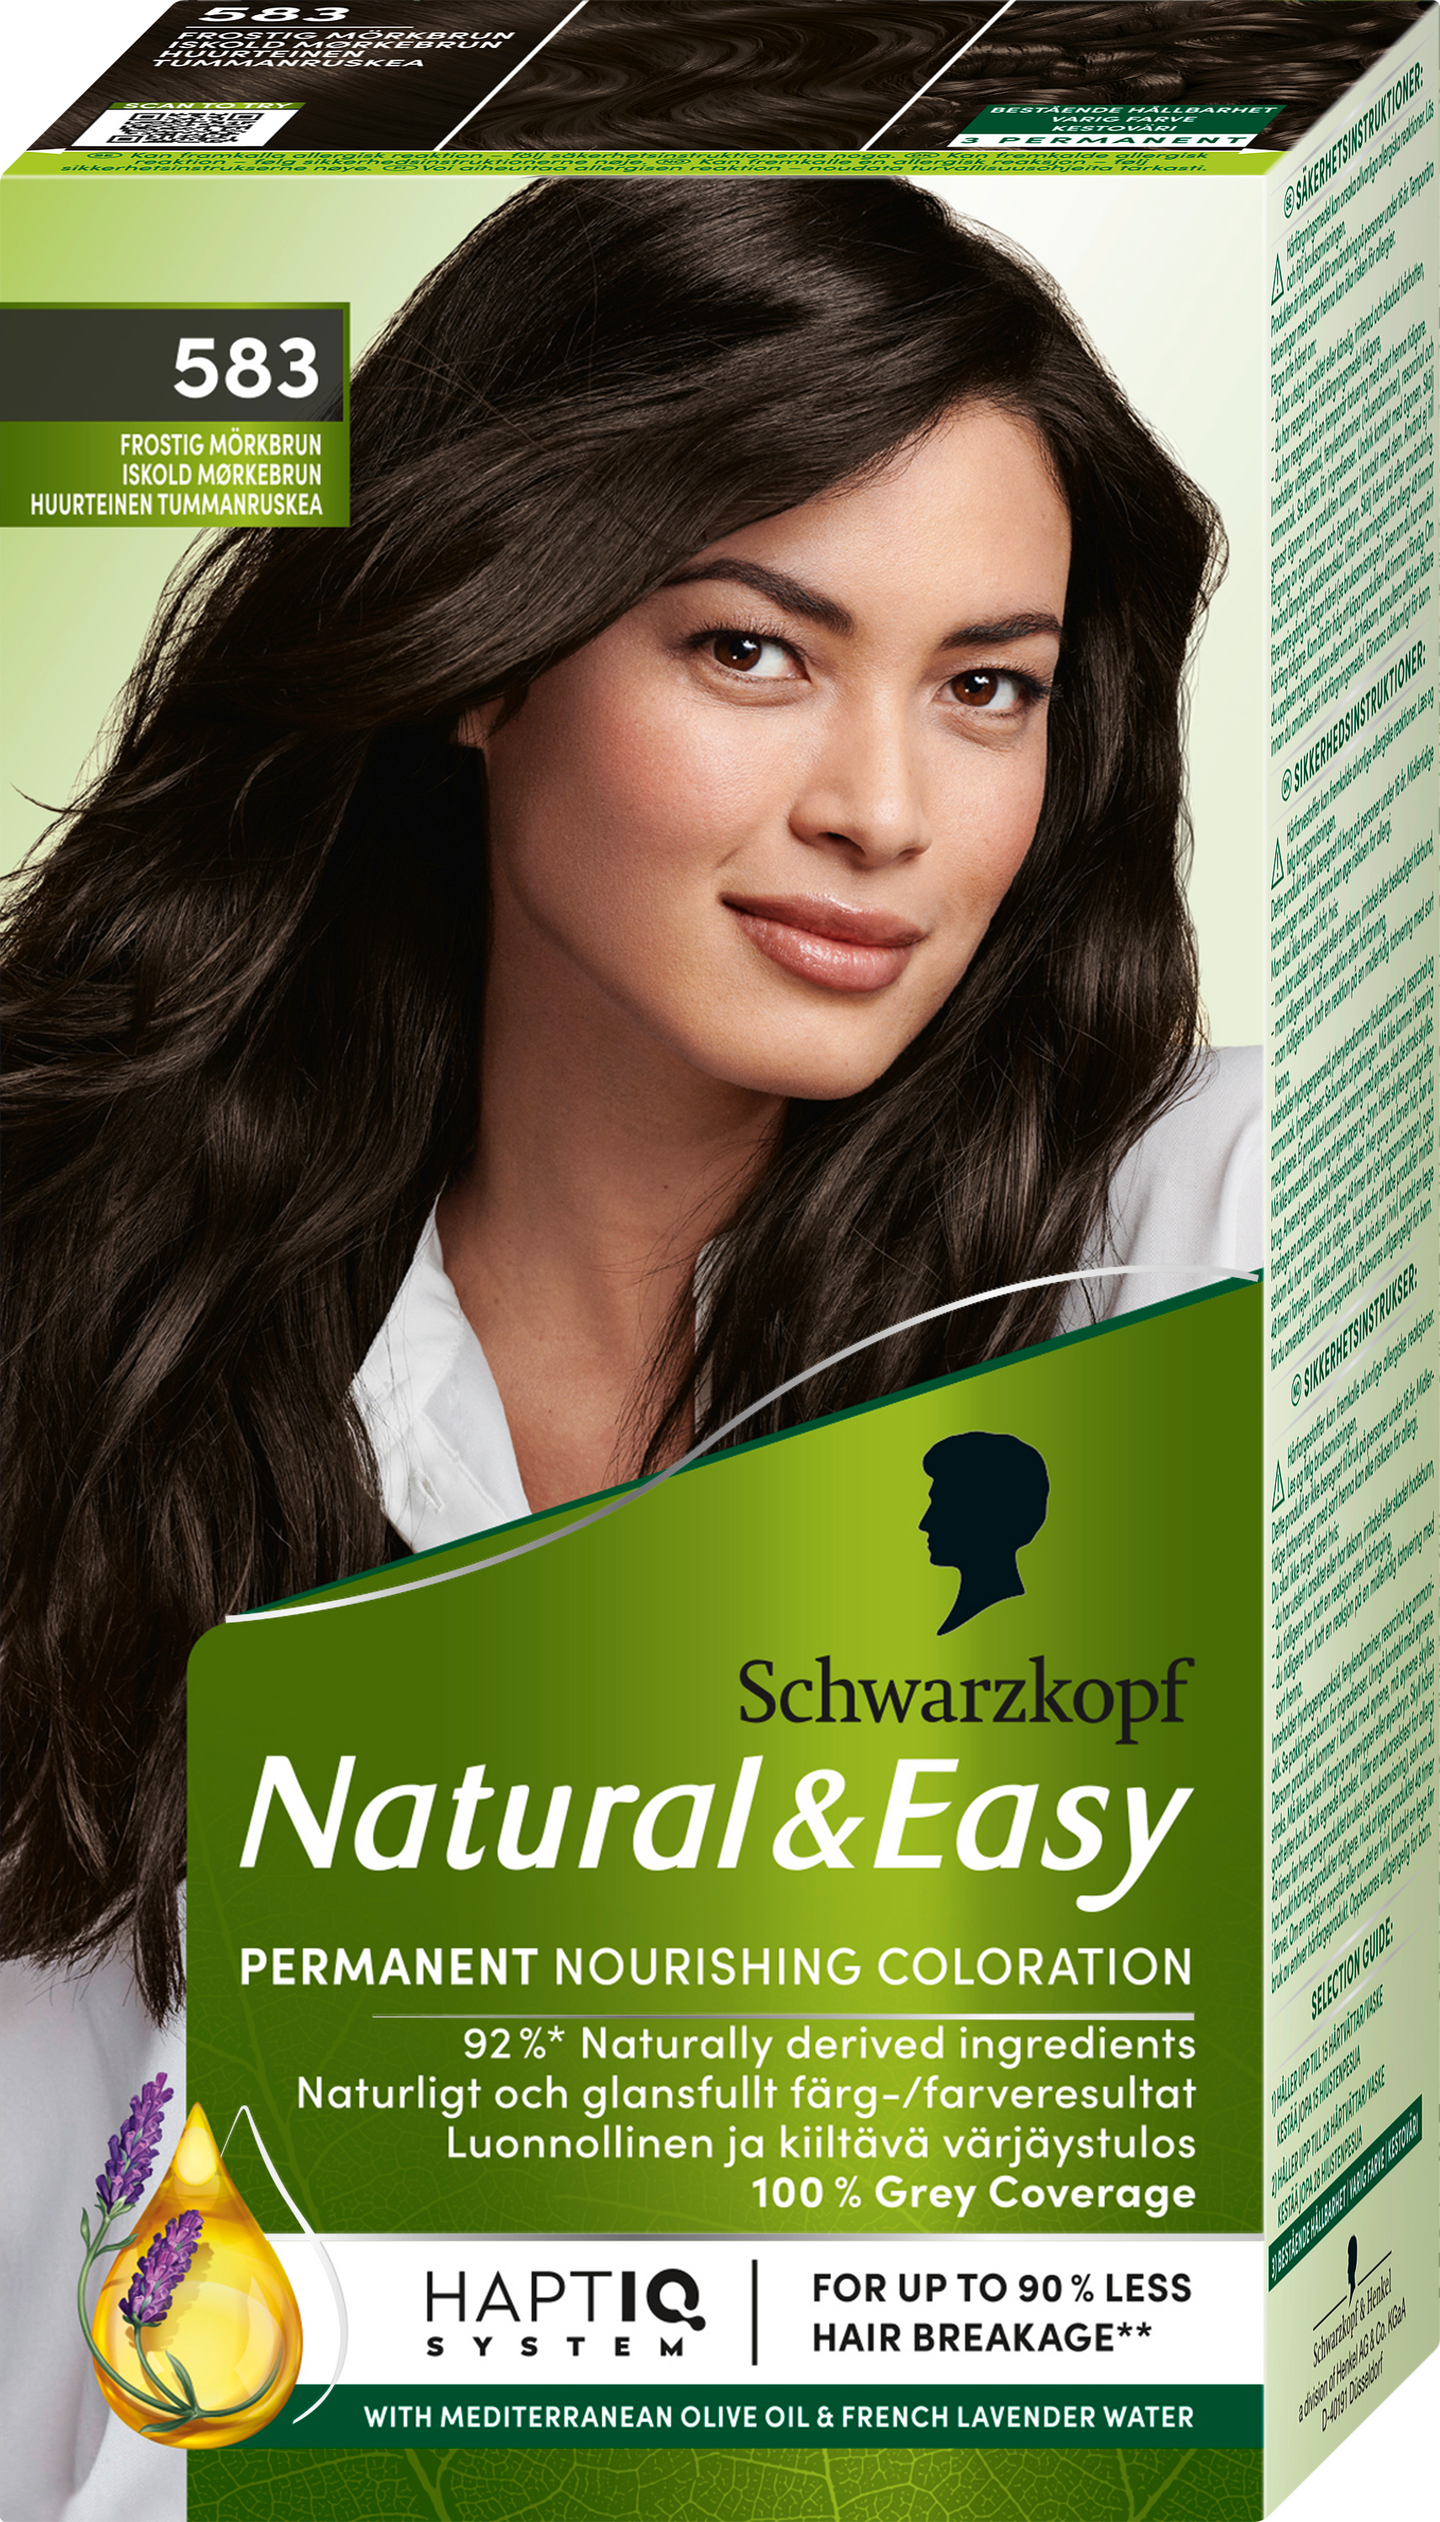 Schwarzkopf Natural & Easy hiusväri 583 Huurteinen Tummanruskea